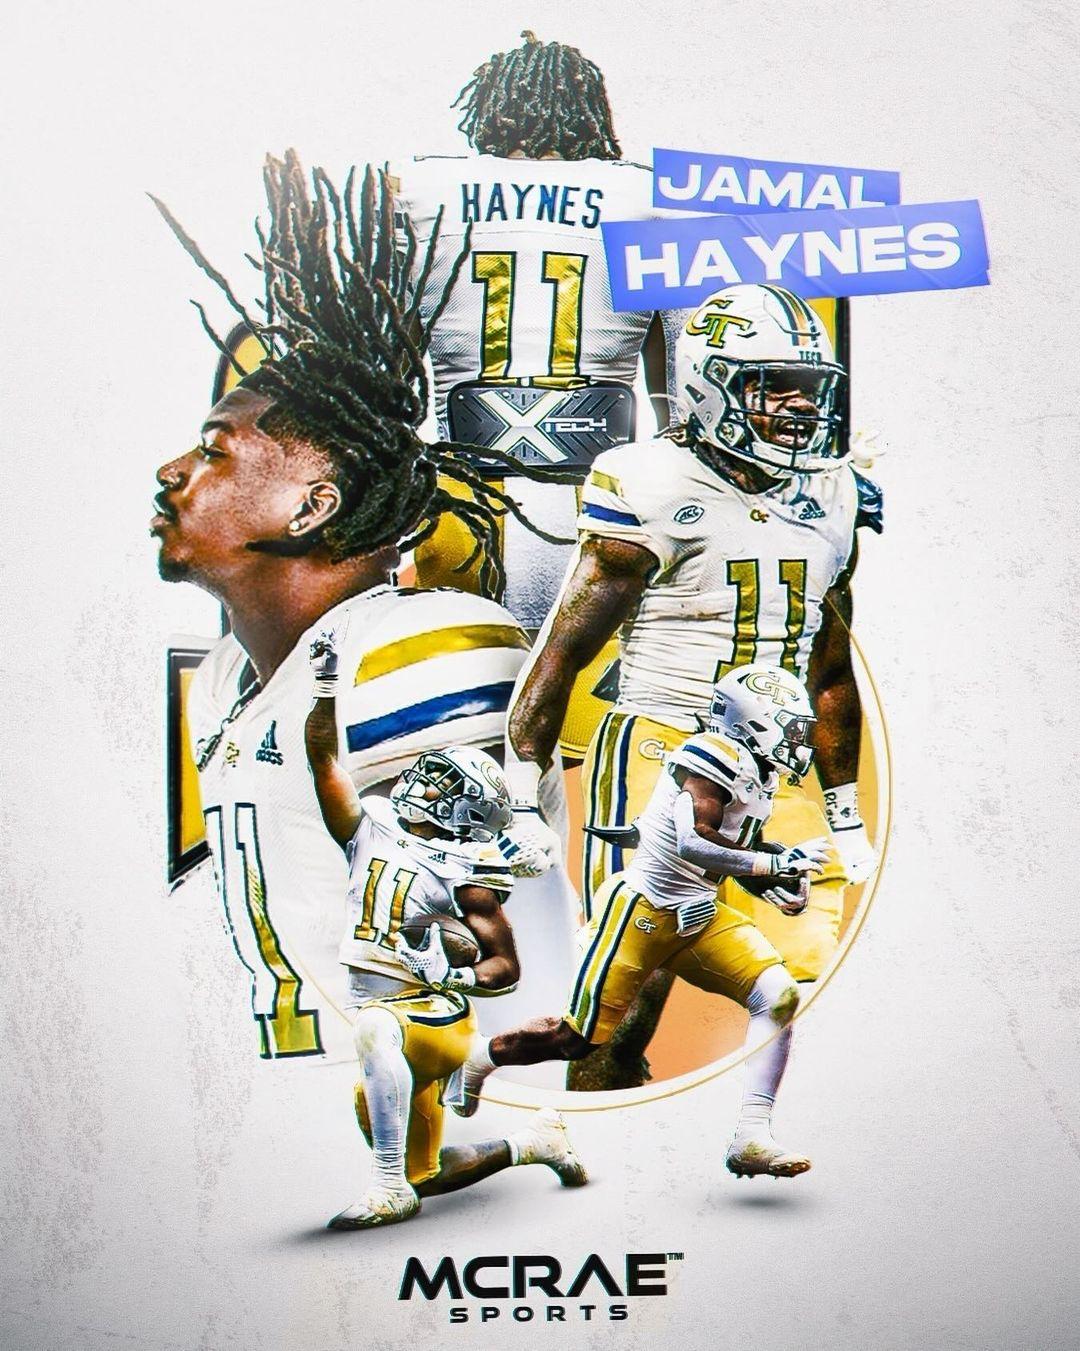 Jamal Haynes Instagram Post Influencer Campaign